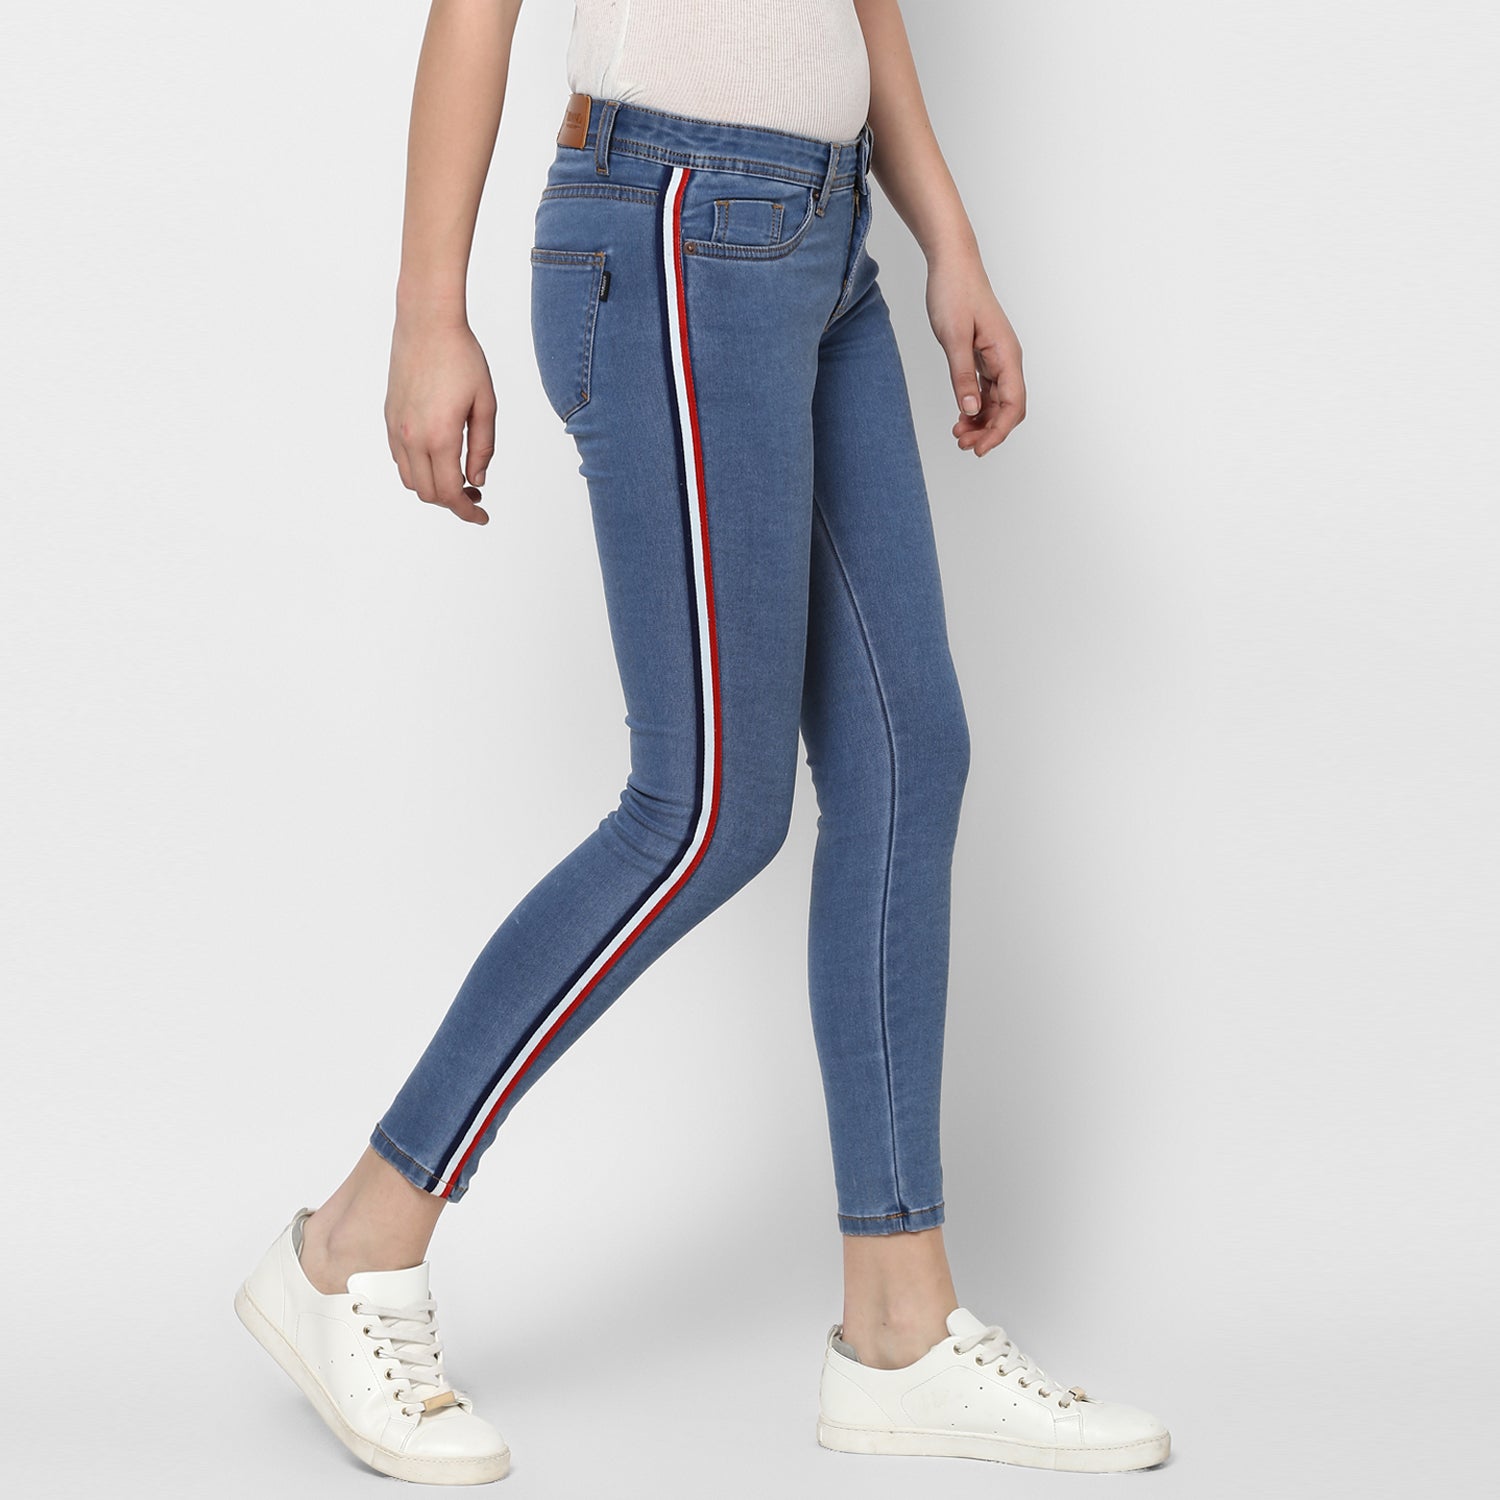 Urbano Fashion Women's Blue Side Striped Skinny Fit Jeans Stretch